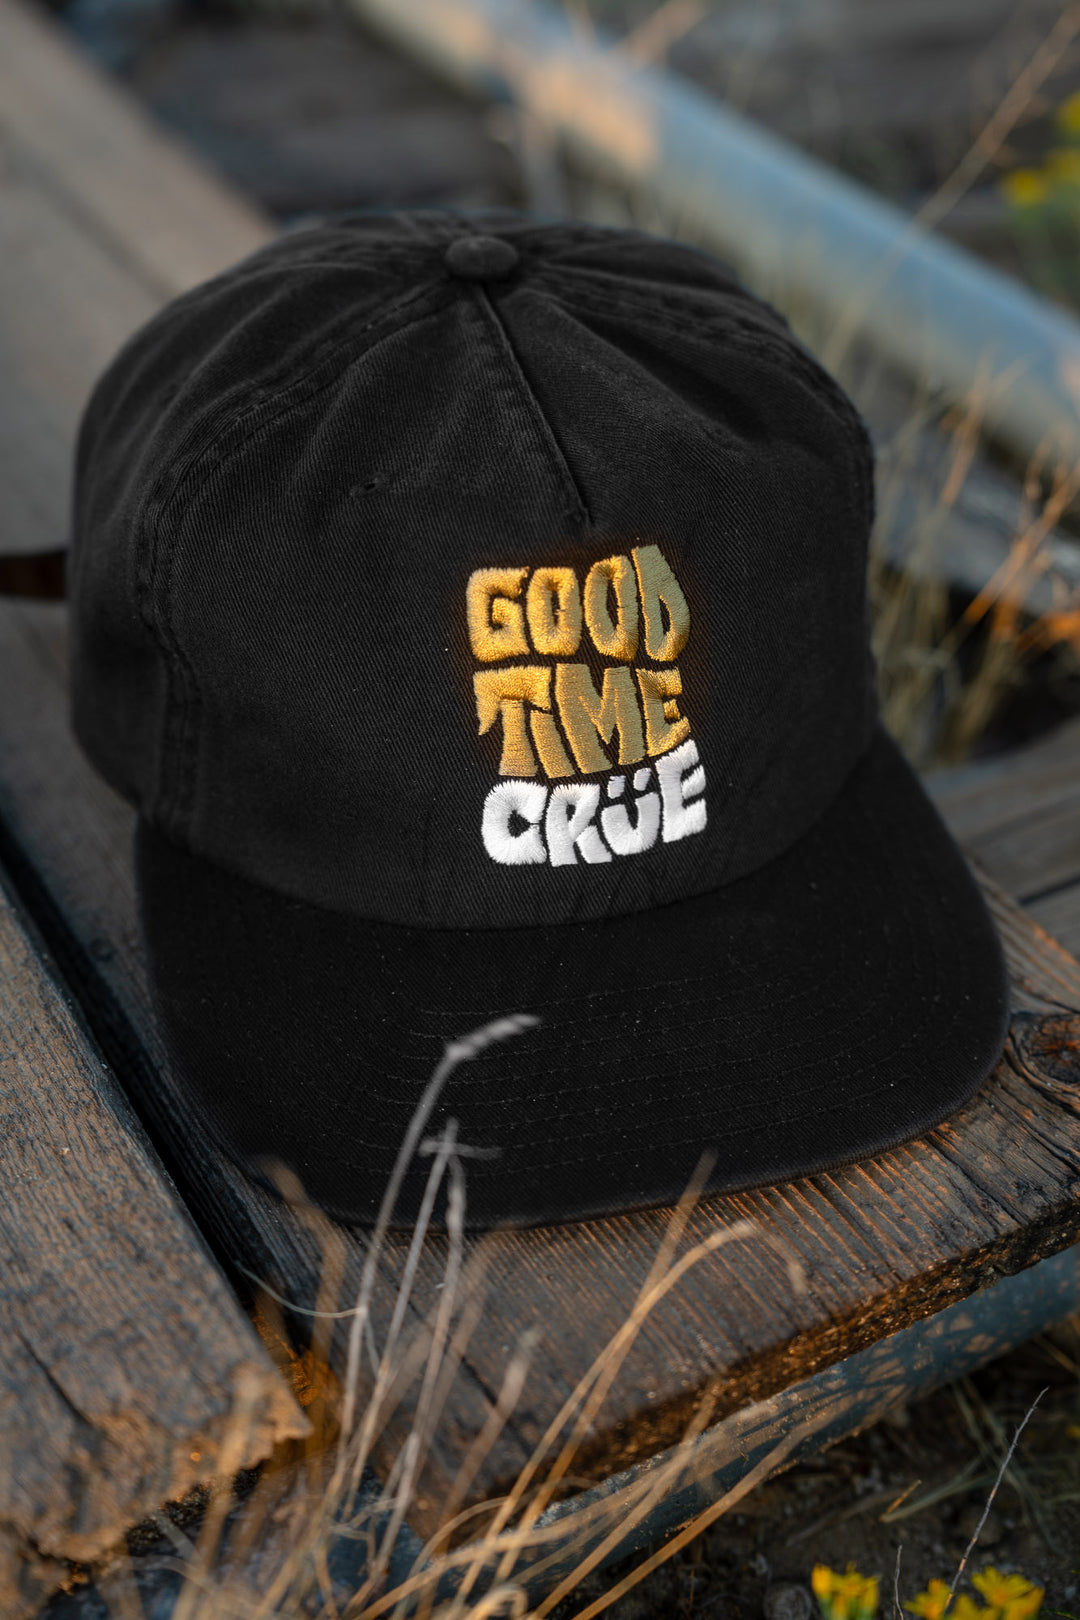 Thrill Seekers Good Time Crüe² Cap Black